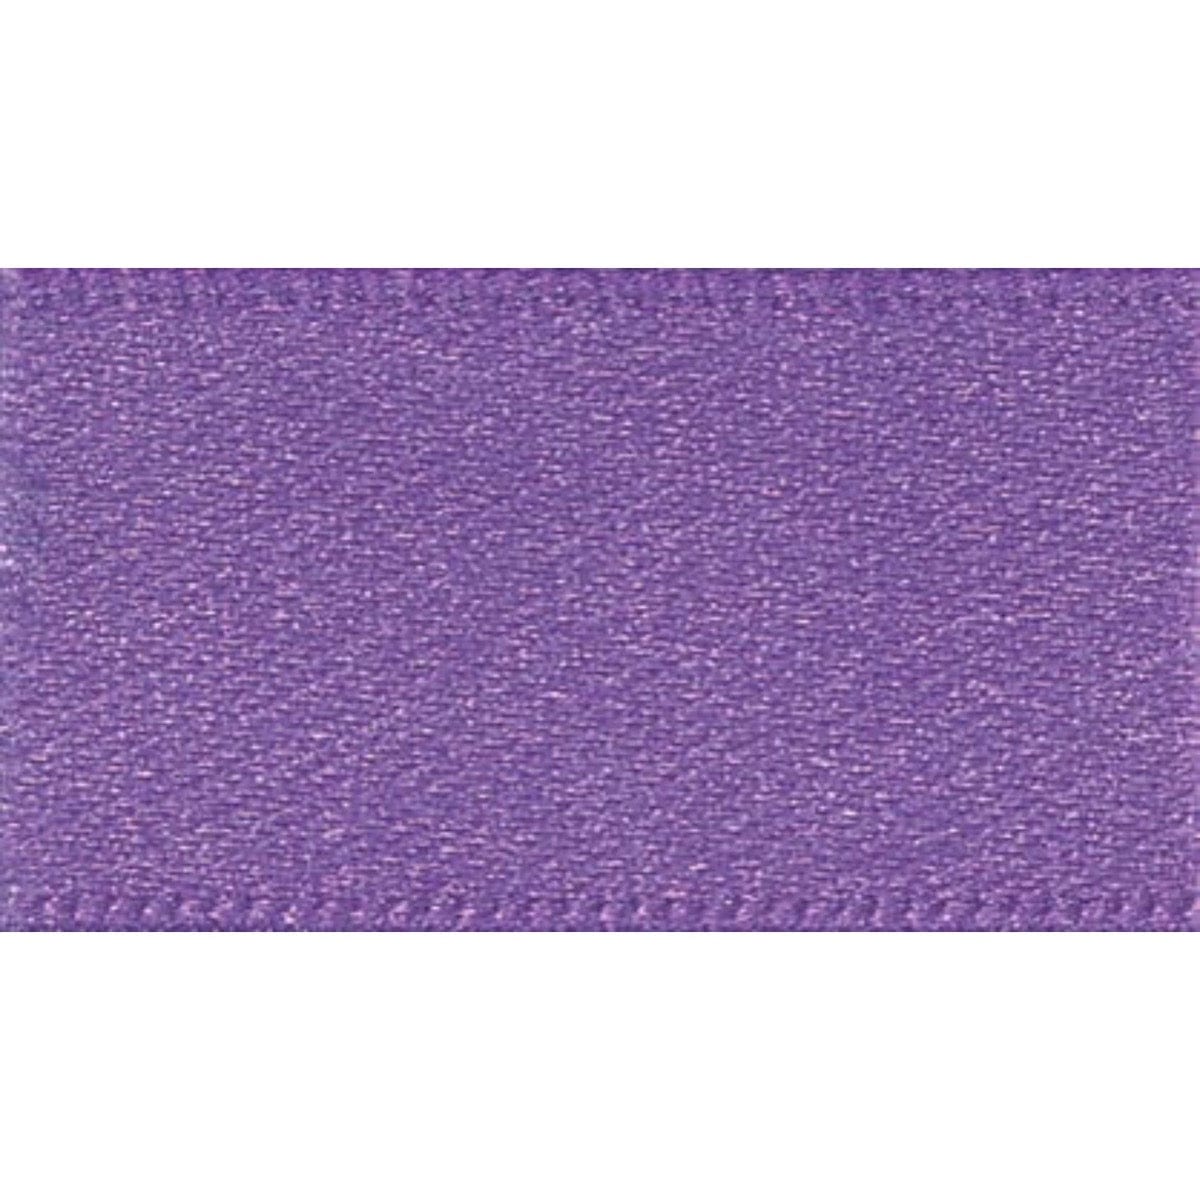 Double Faced Satin Ribbon Purple: 35mm wide. Price per metre.